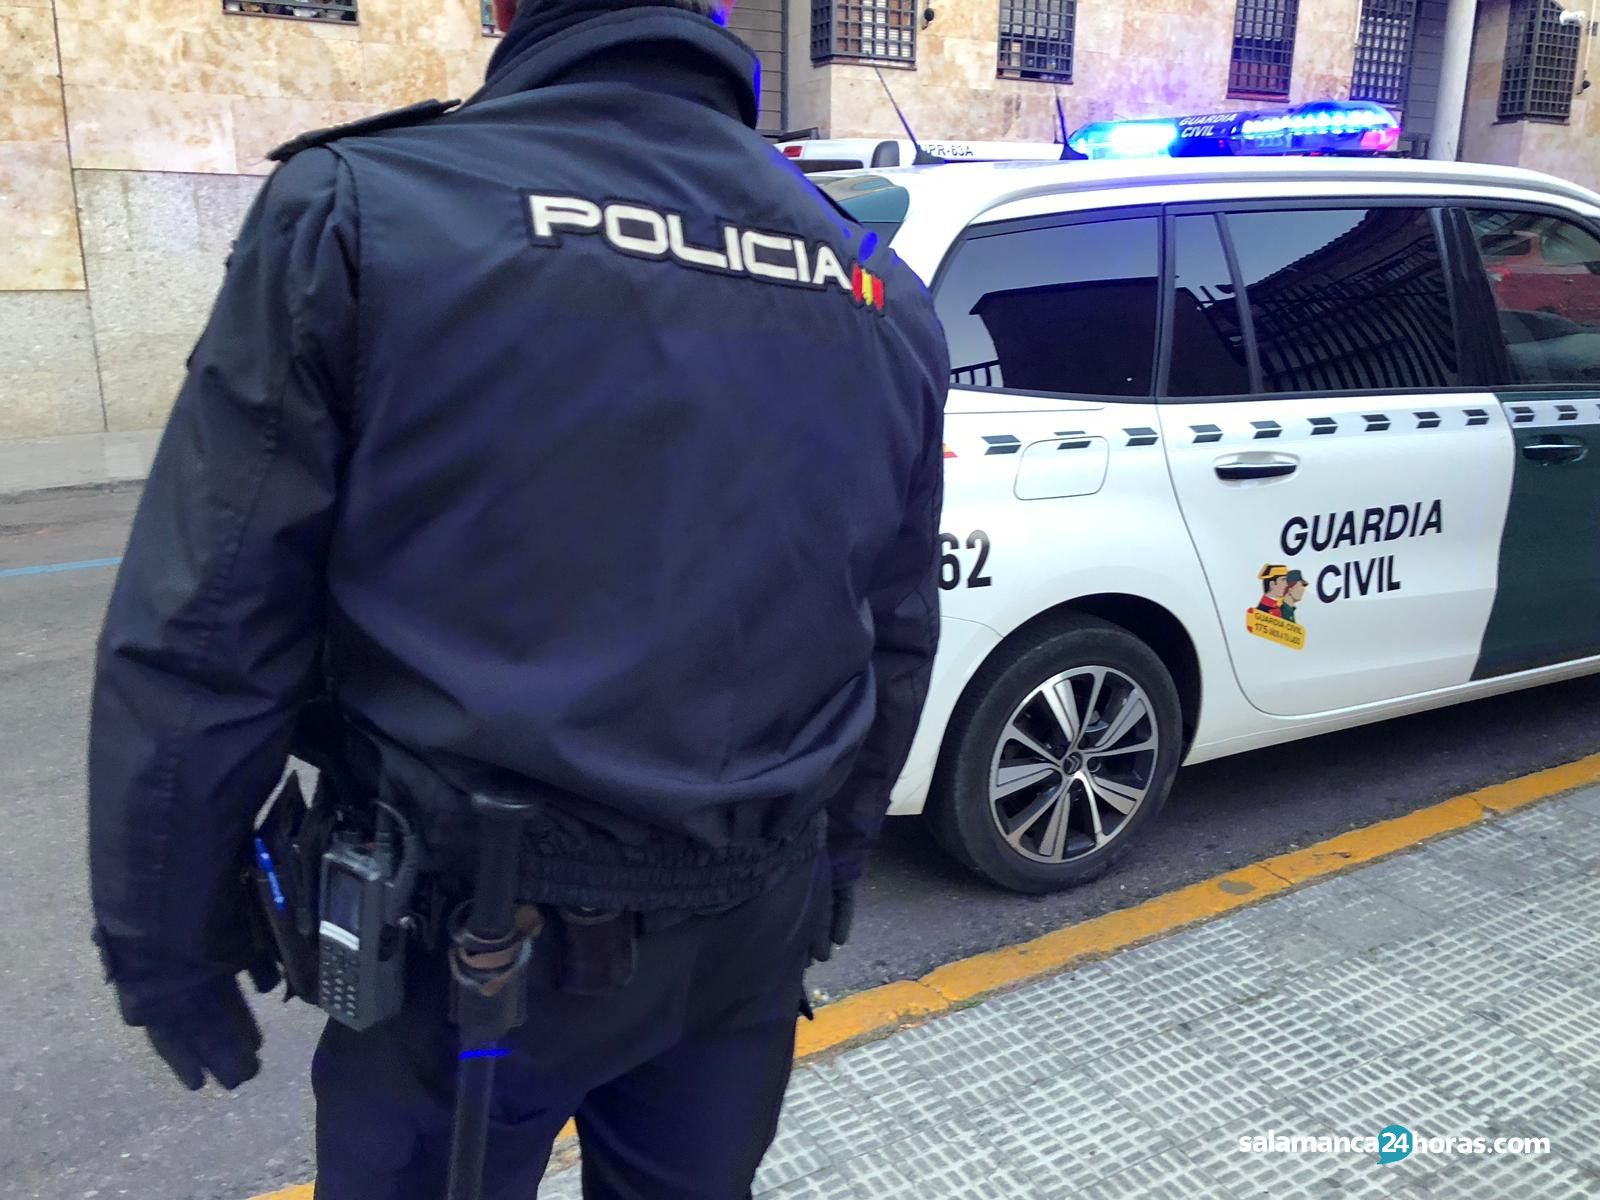  Policía Nacional Guardia Civil San Ambrosio (9) 